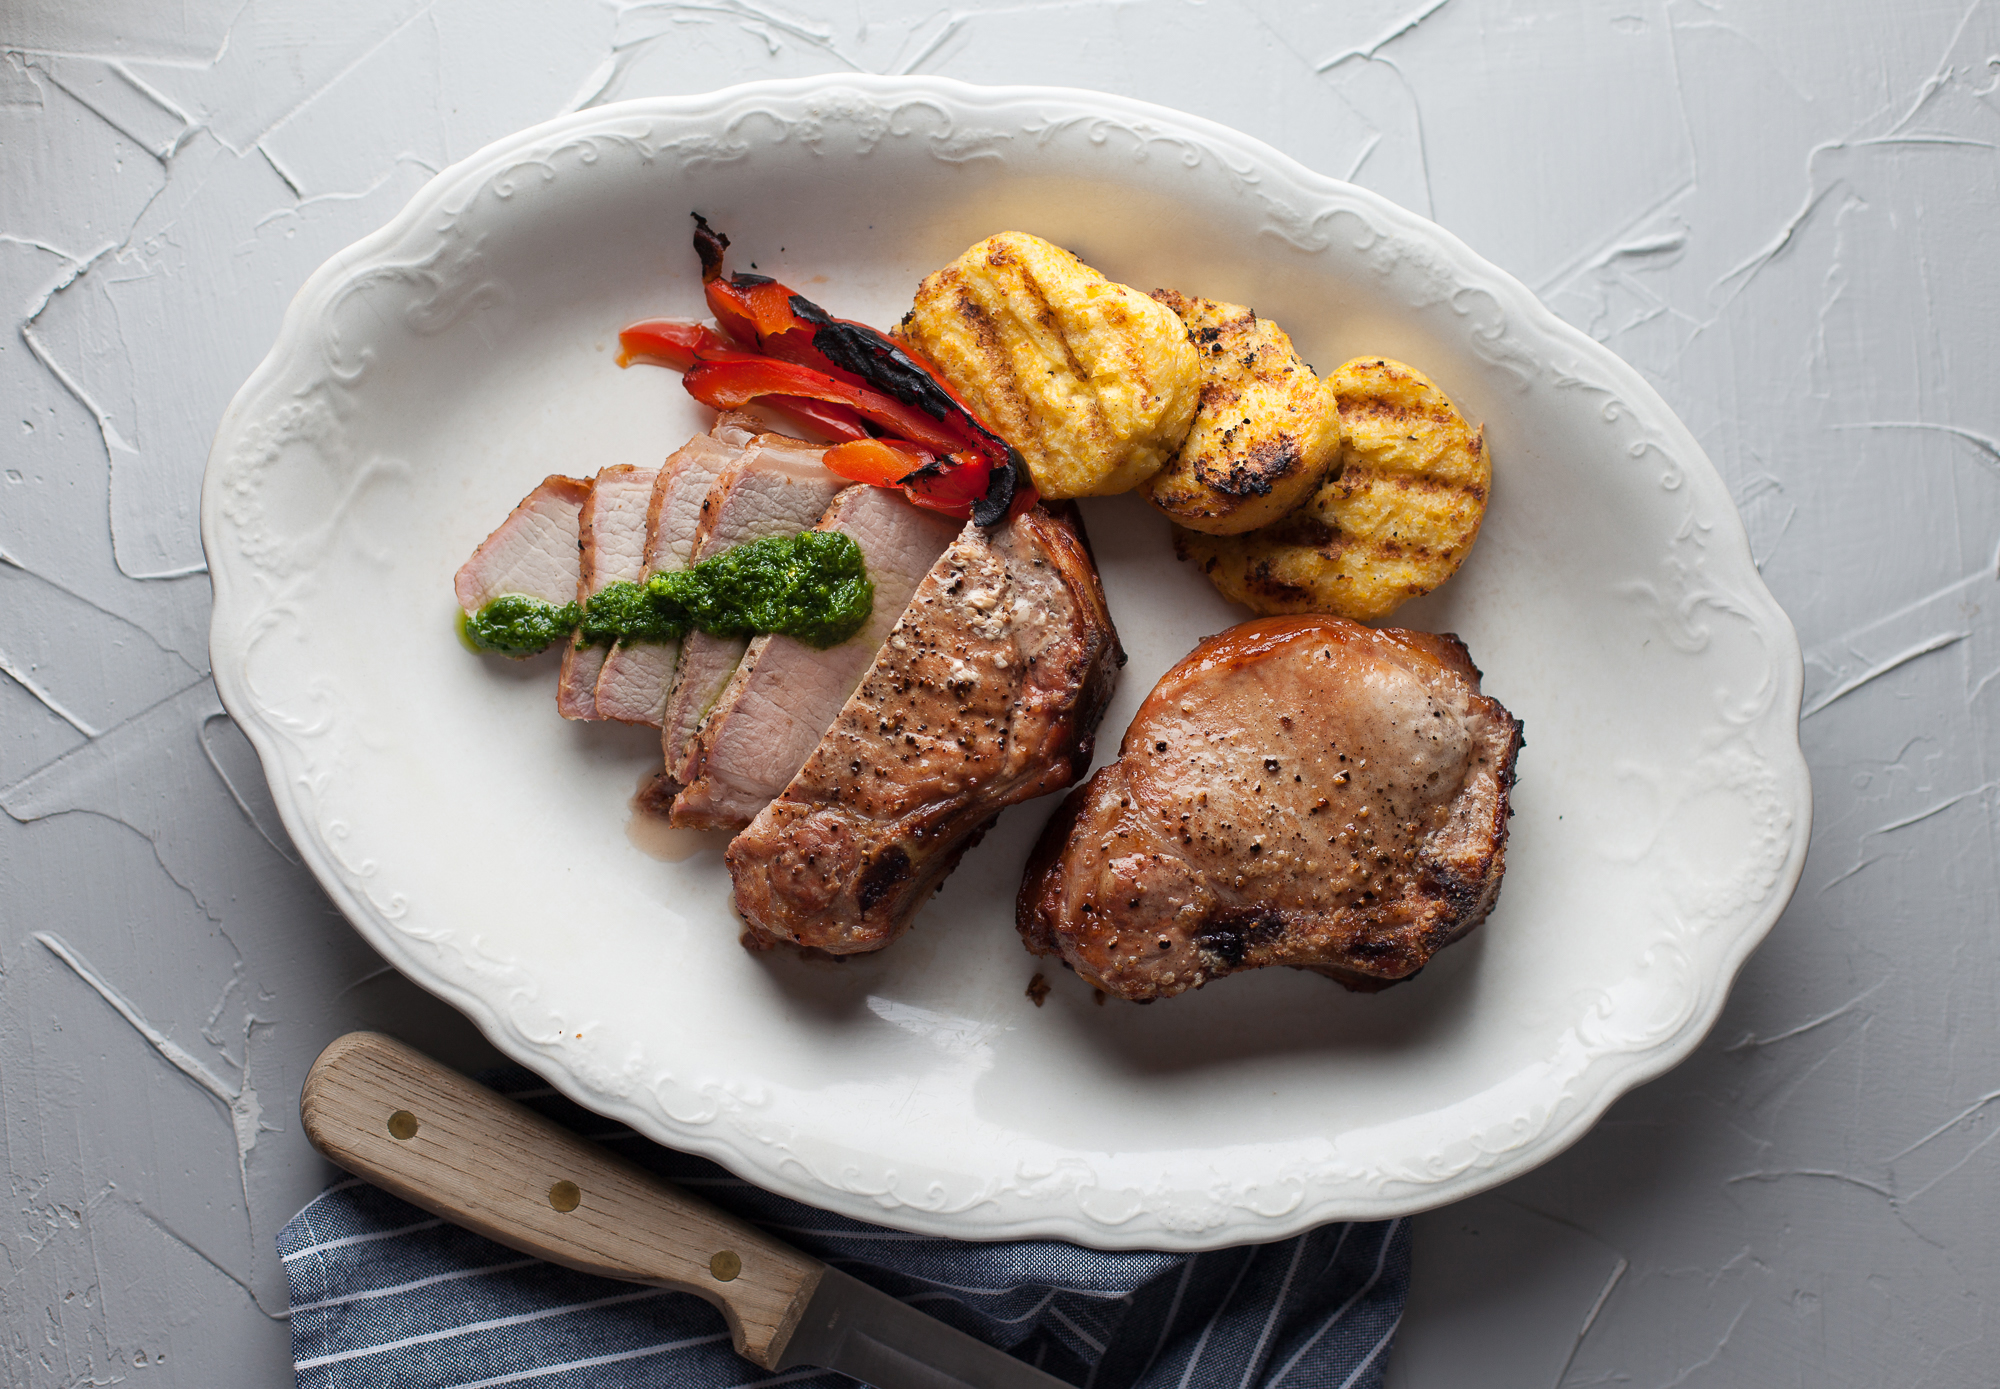 Grilling Dinner Idea: Oak Smoked Pork Chops with Arugula Pesto